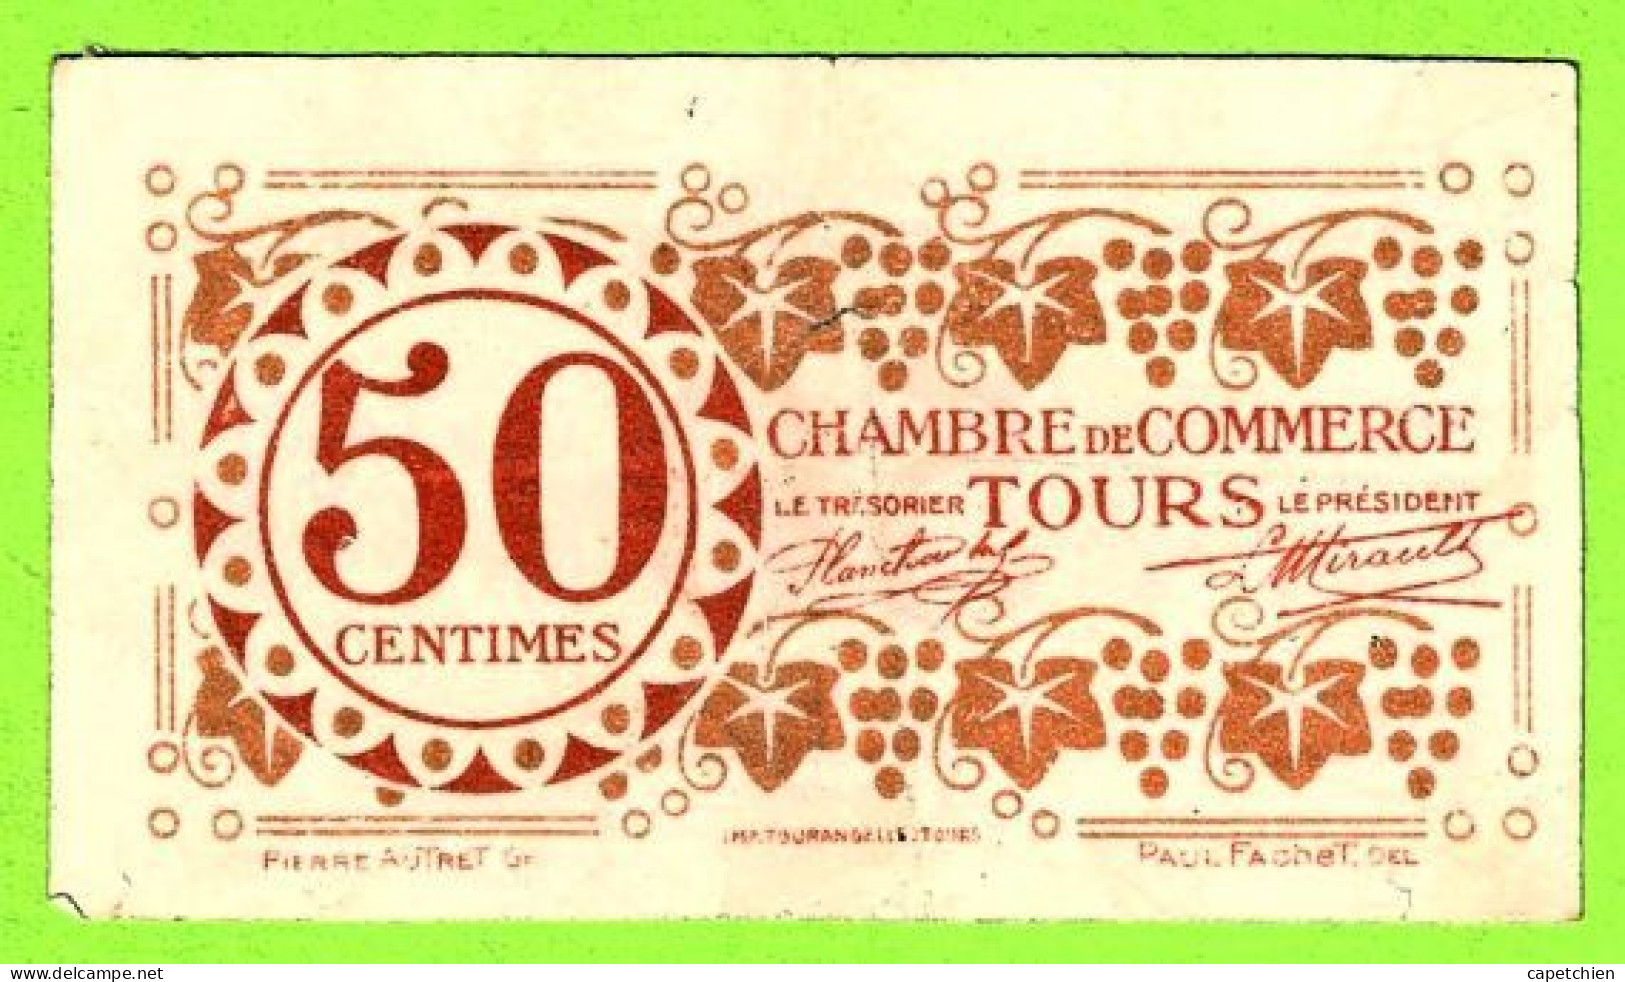 FRANCE / CHAMBRE De COMMERCE De TOURS / 50 CENTIMES/ 27 DECEMBRE 1920 / 461,639 / SERIE 3eme - Camera Di Commercio